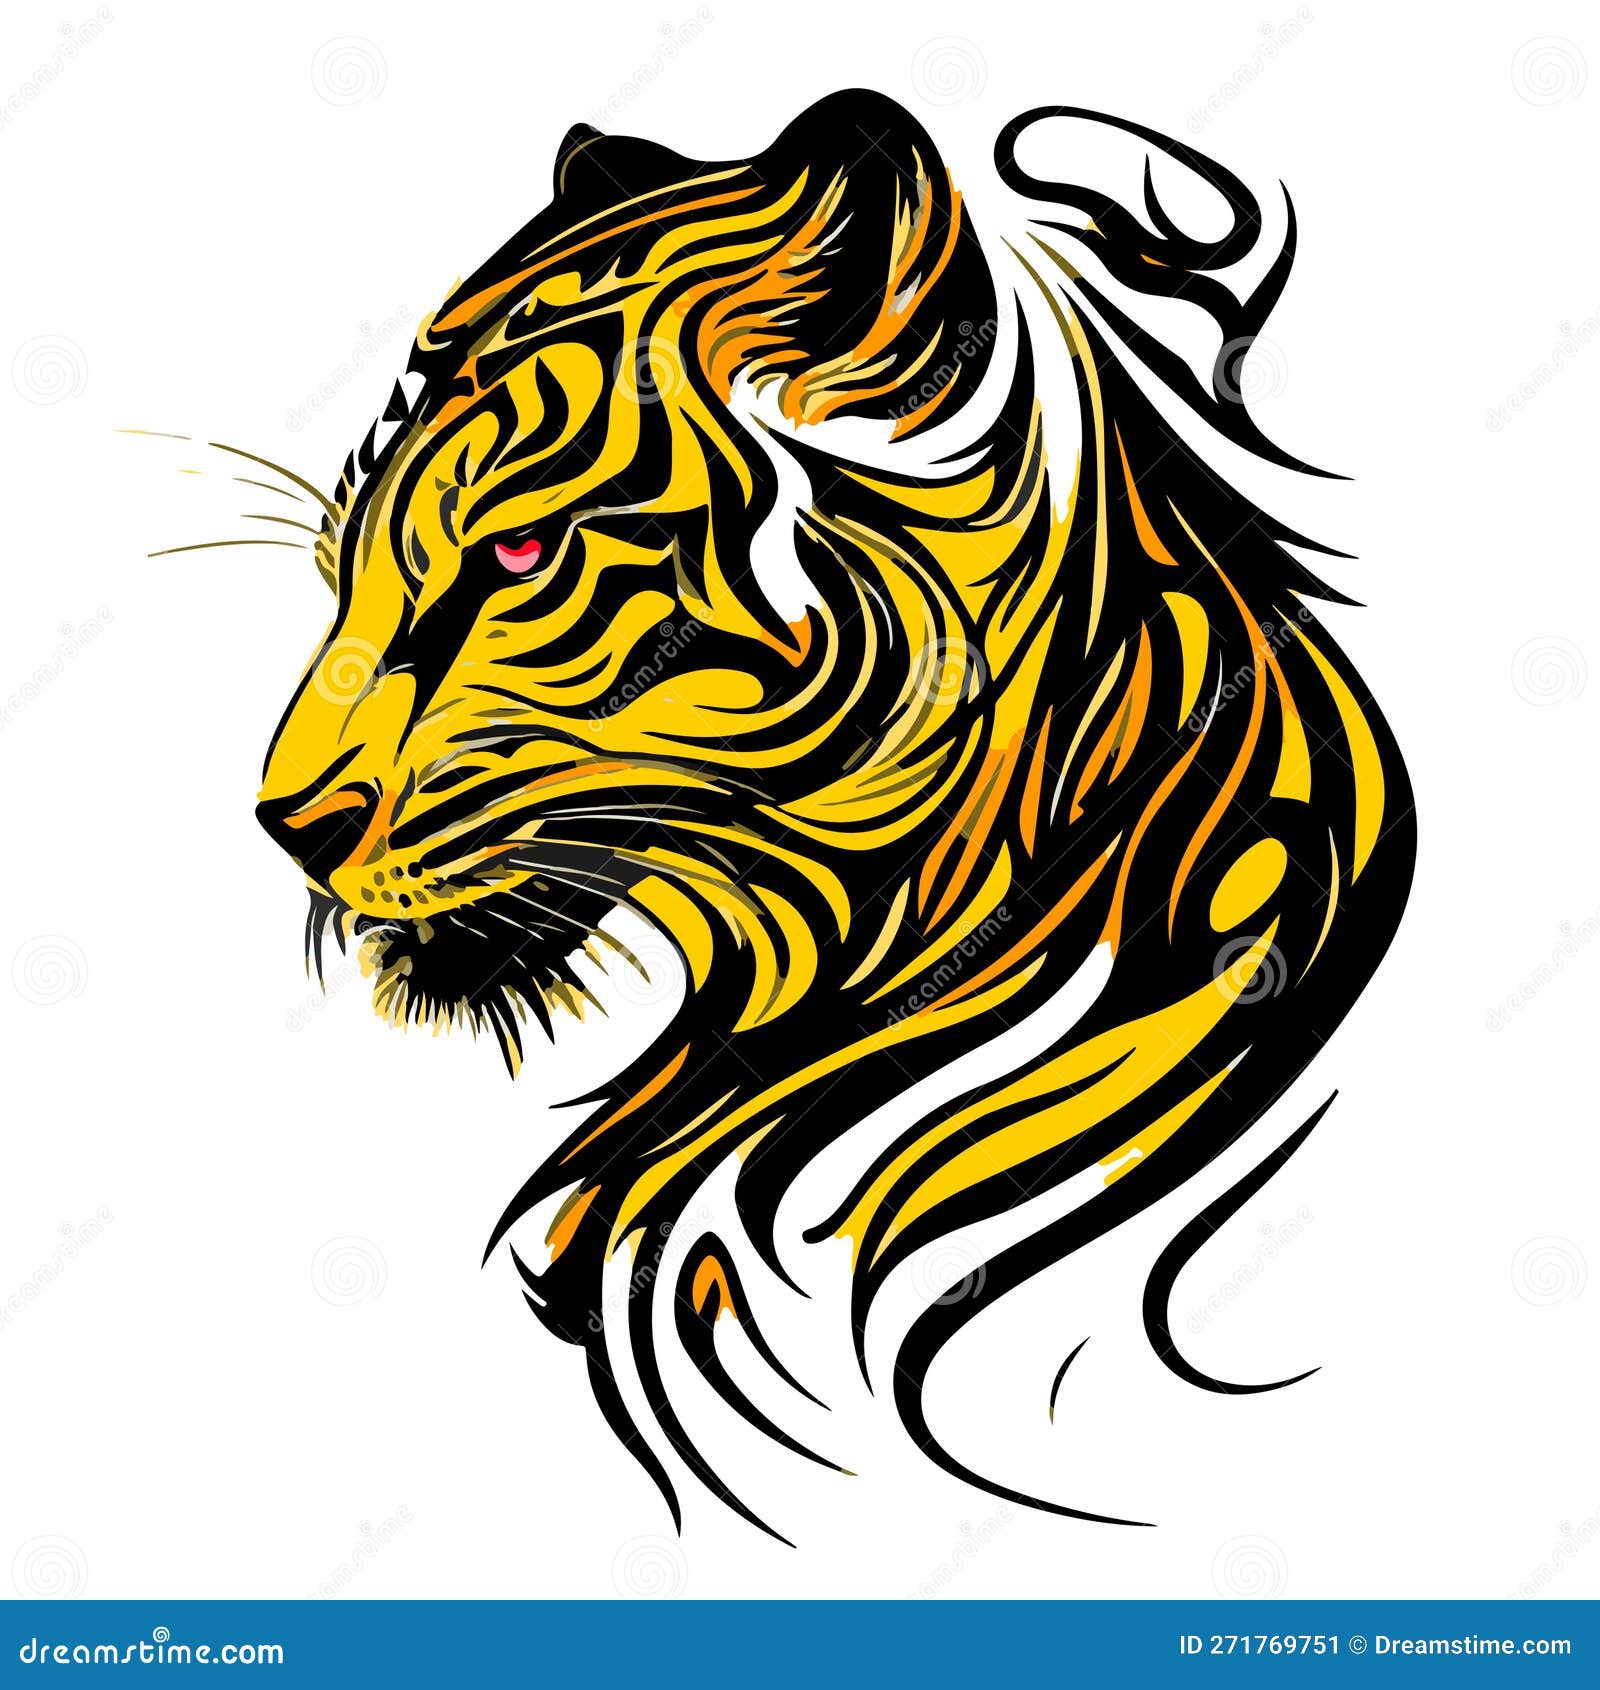 101 Amazing Japanese Tiger Tattoo Designs You Need To See! | Tiger tattoo  design, Tiger tattoo, Japanese tiger tattoo